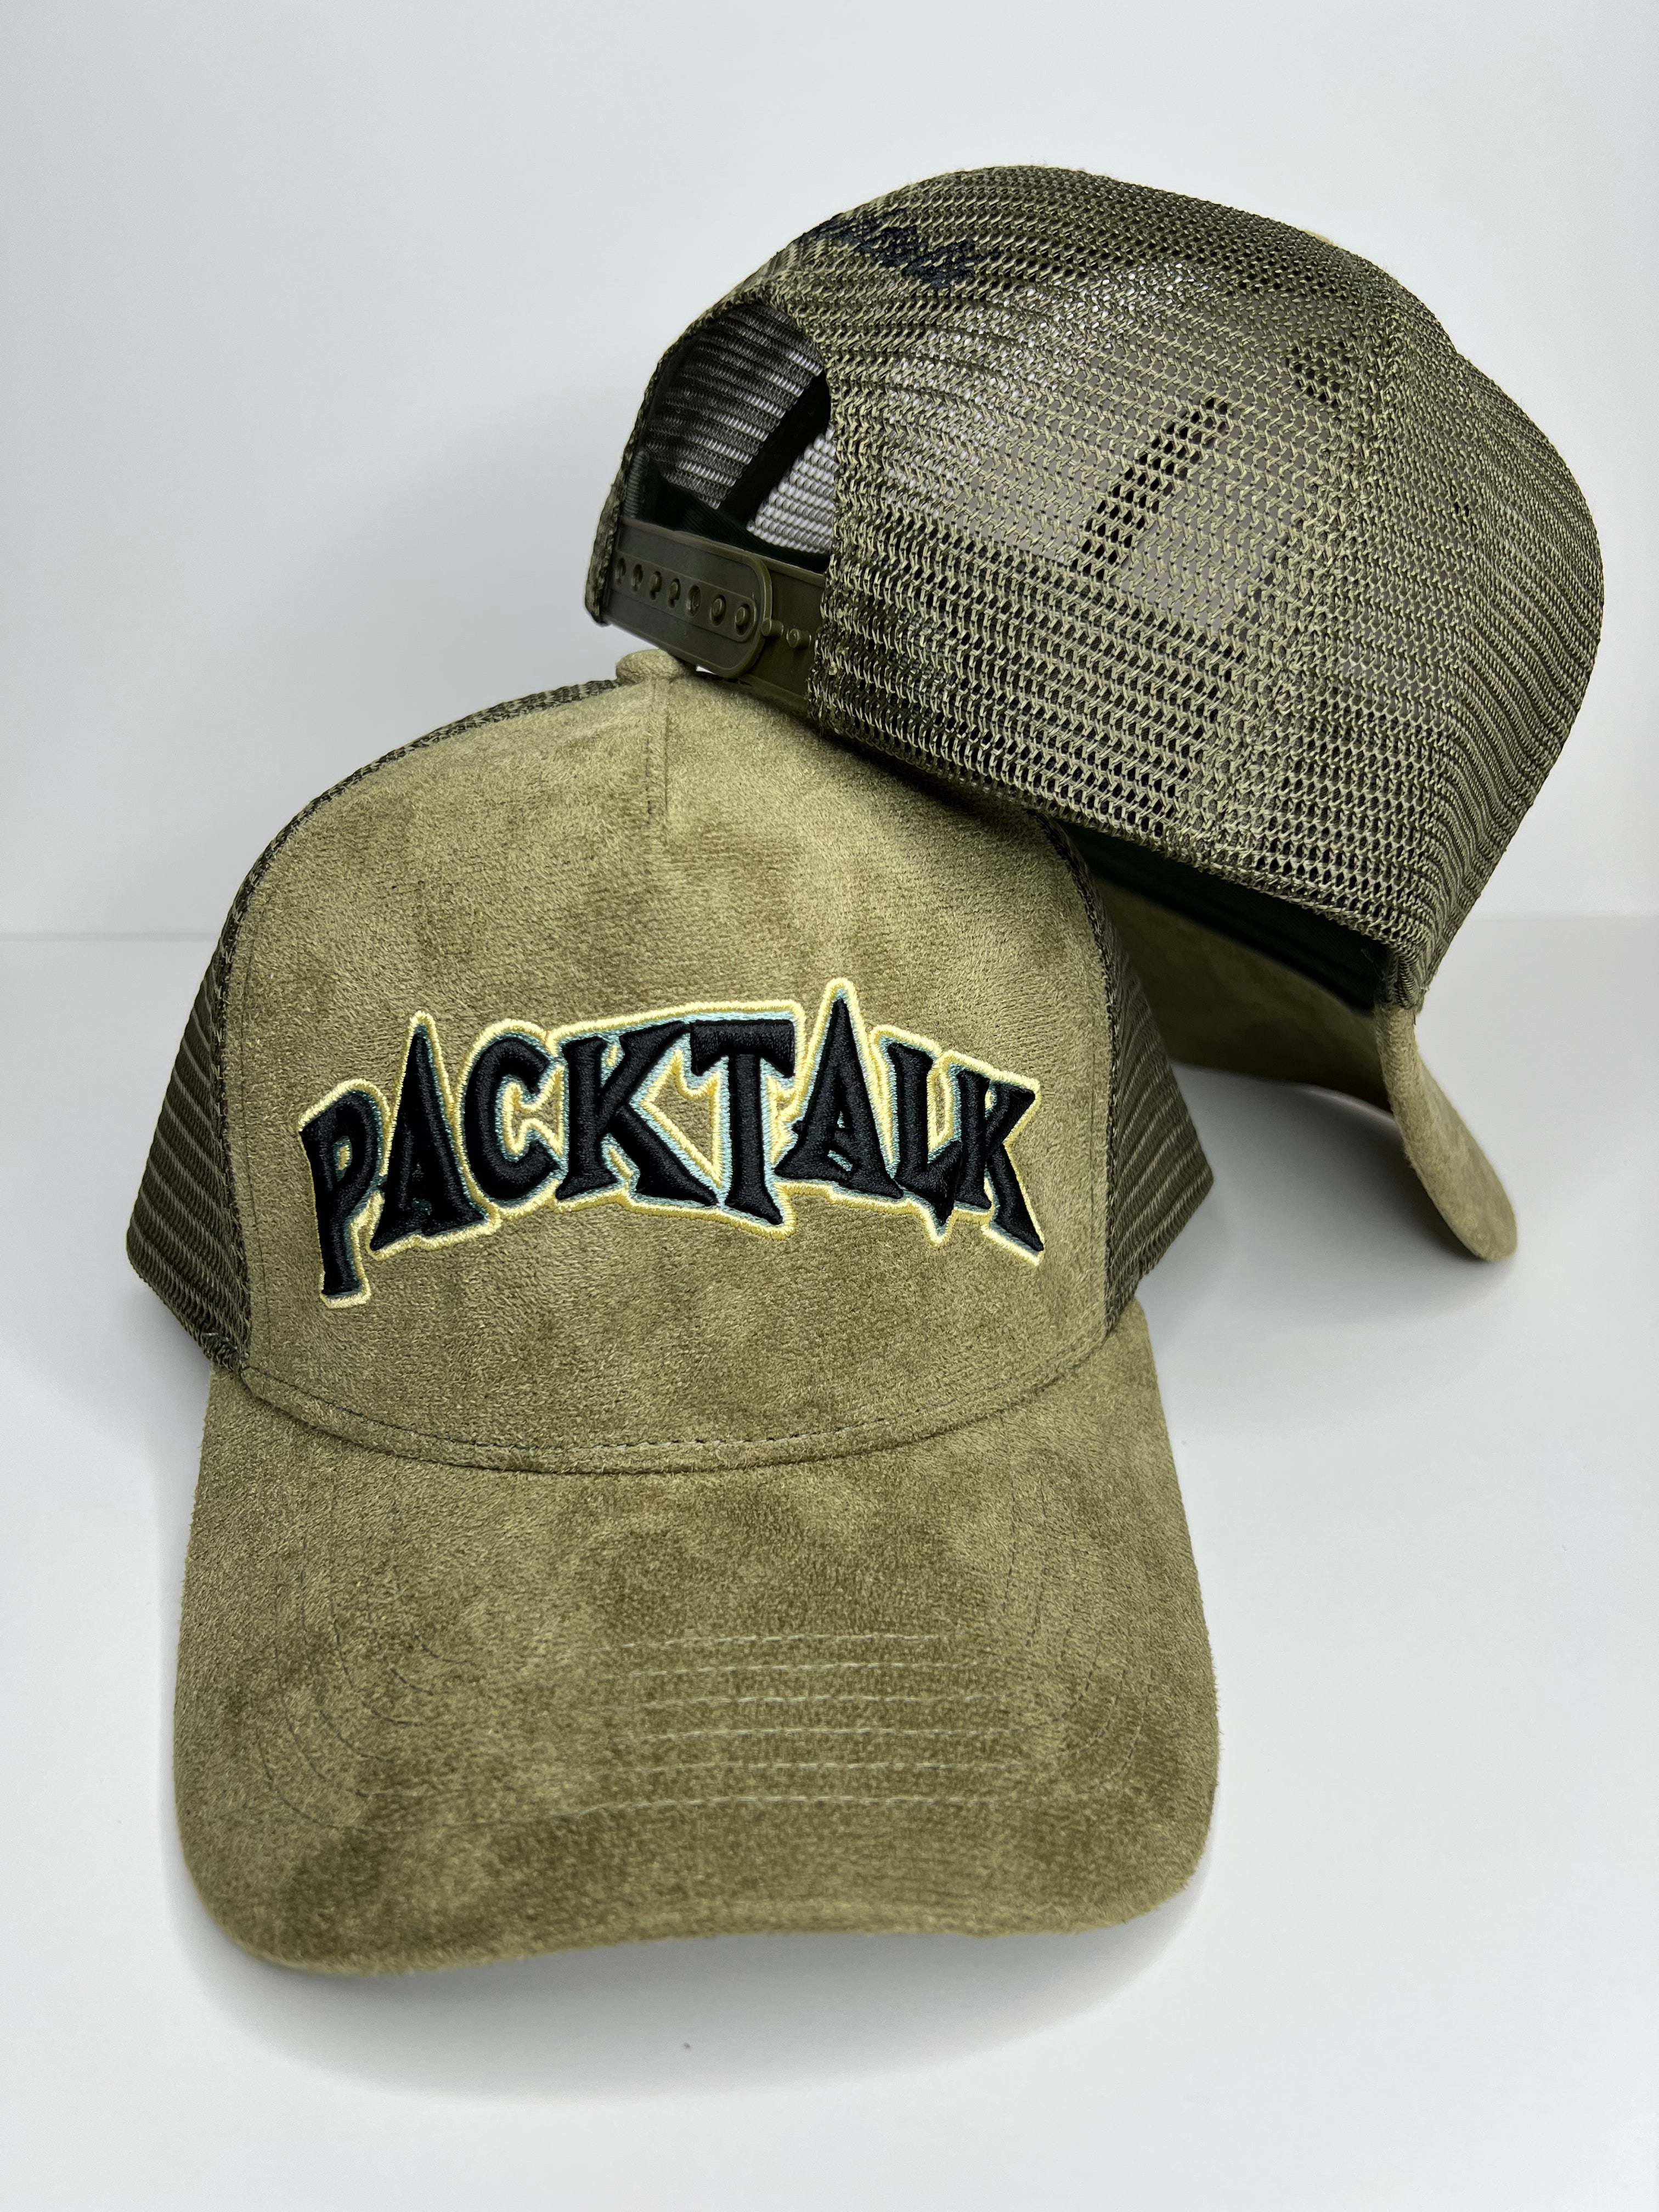 Packtalk Trucker Hats